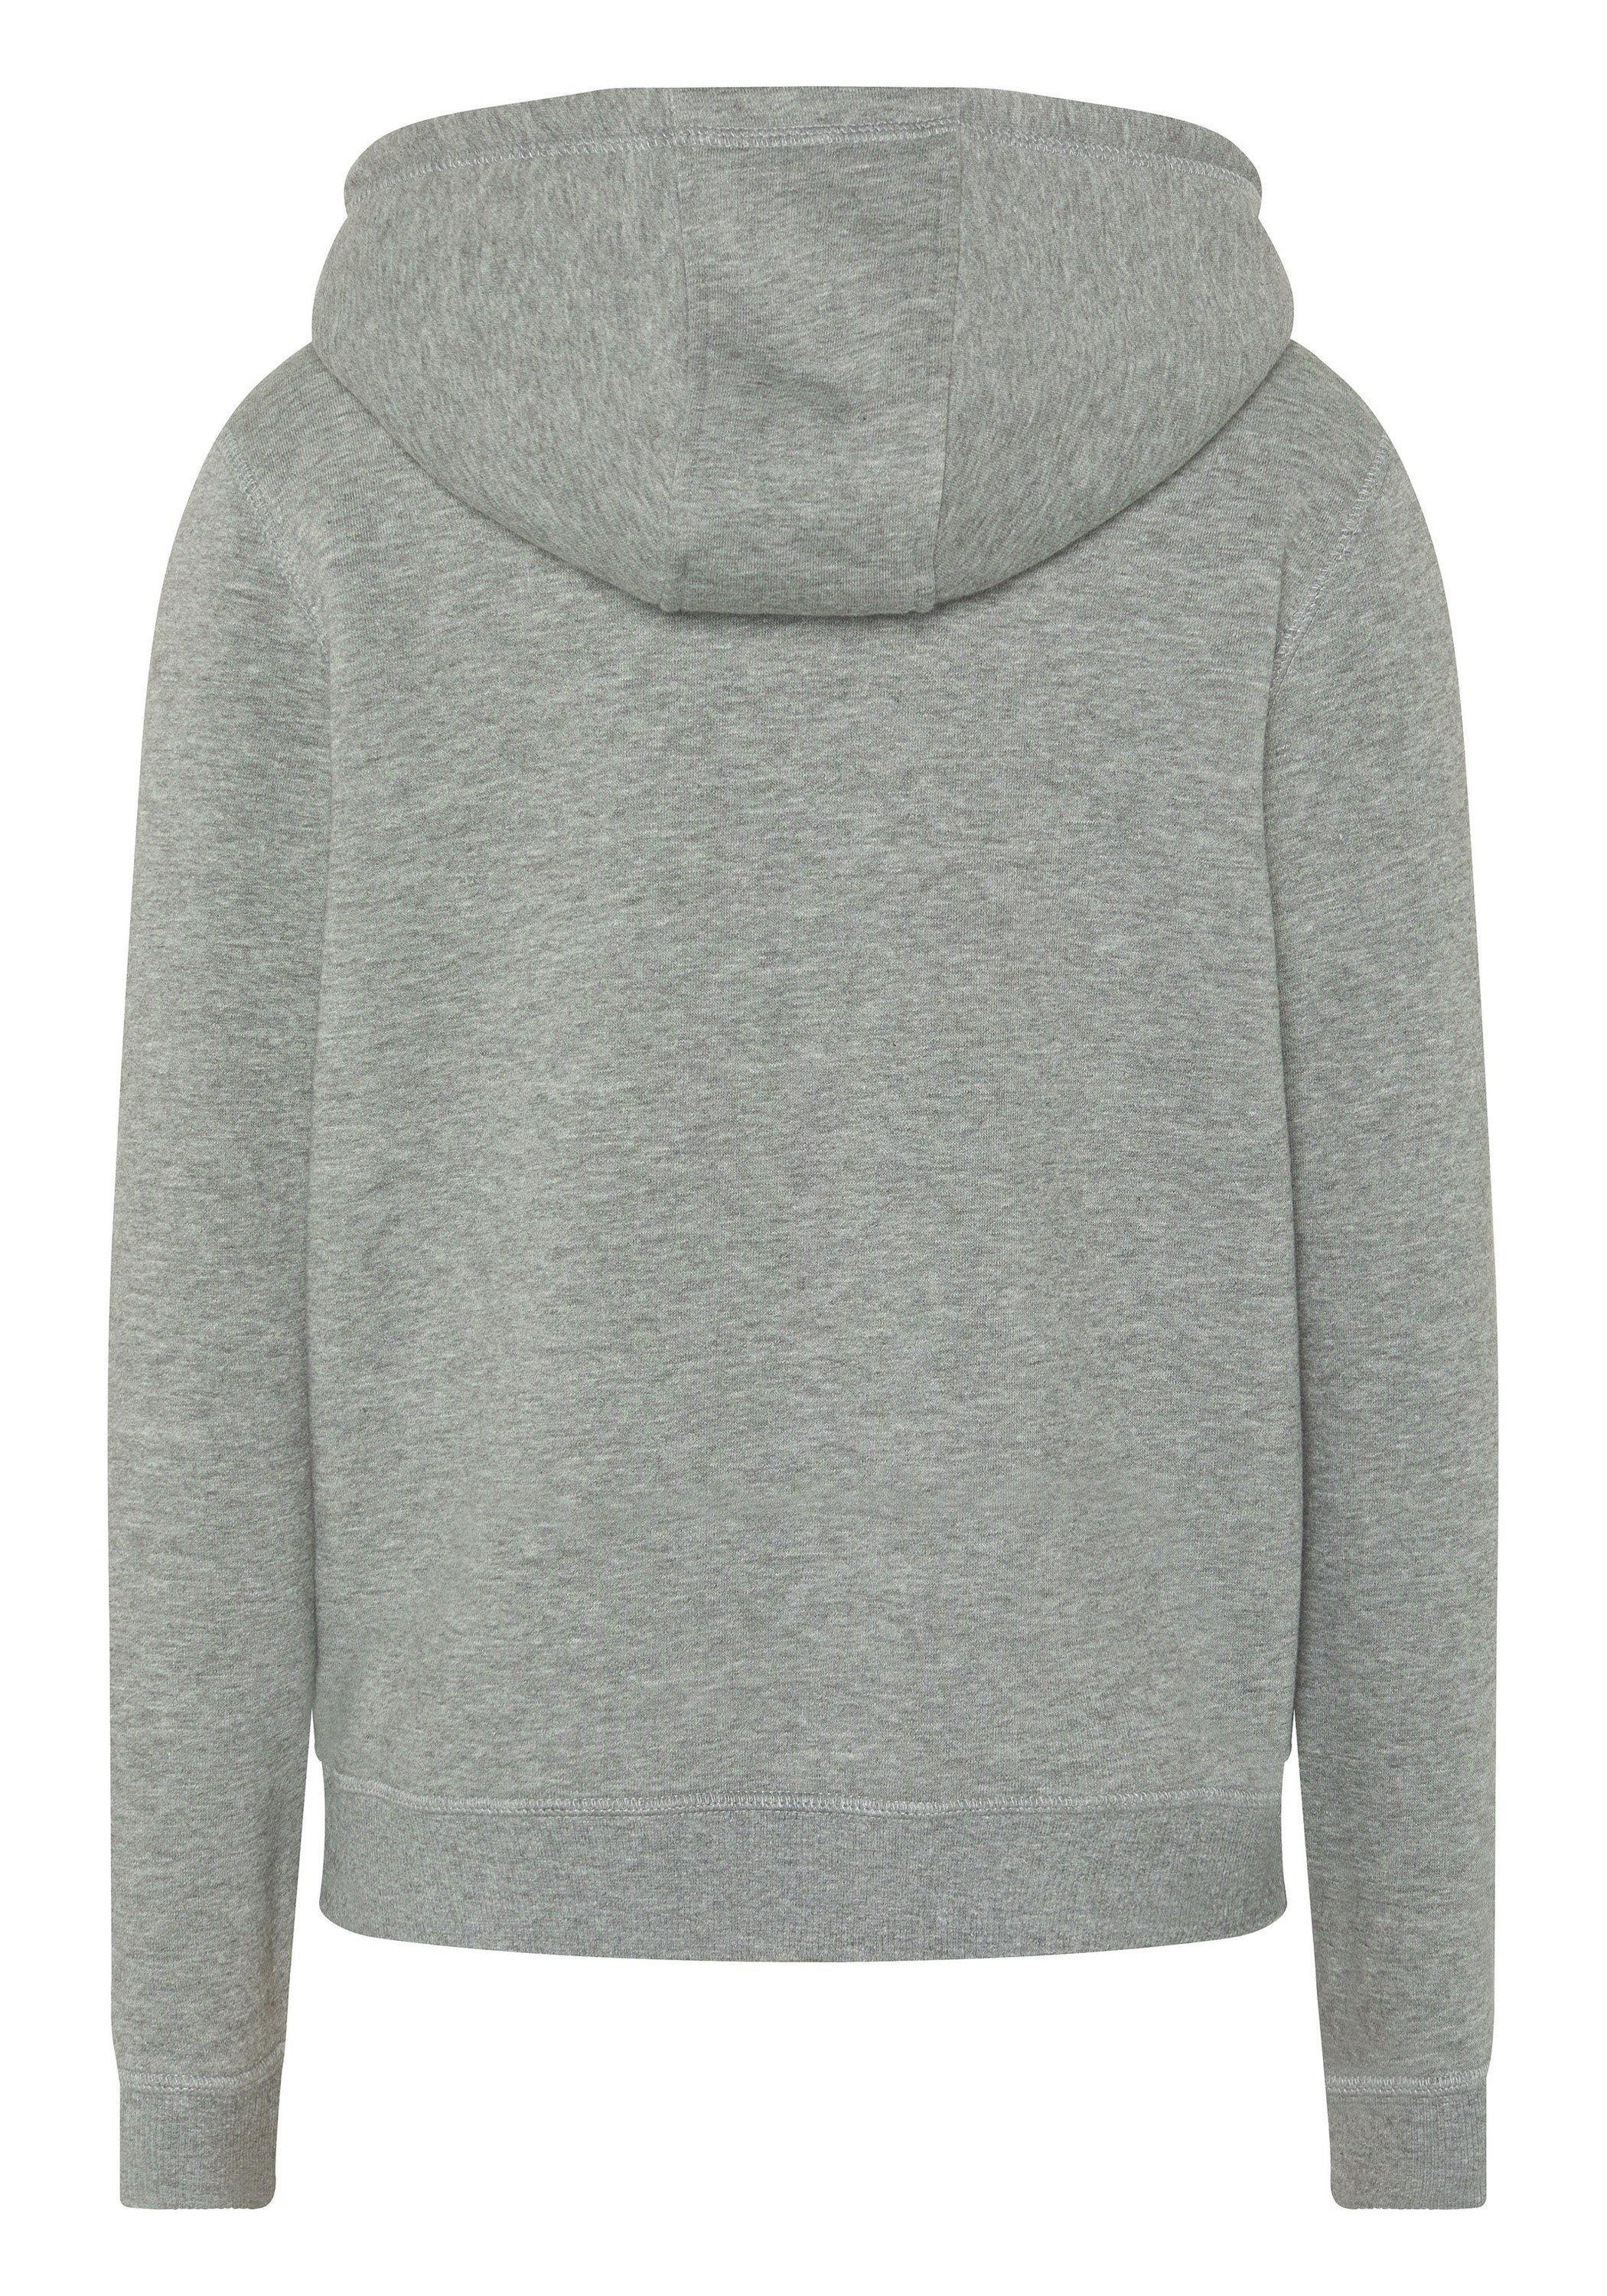 Chiemsee Kapuzensweatshirt Gray 1 Hoodie Label-Mountain-Print Melange Neutral 17-4402M mit